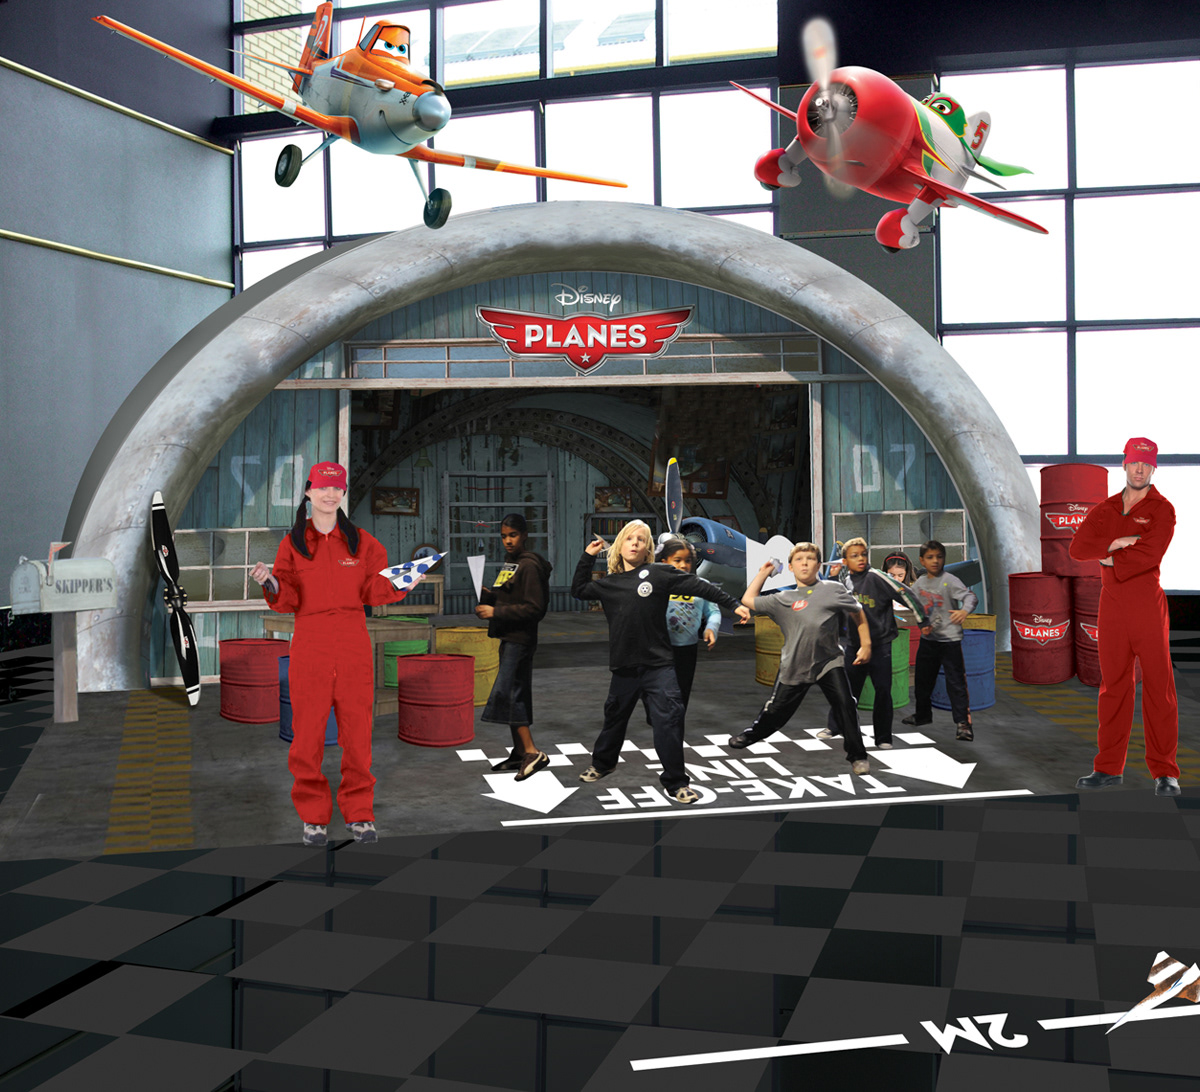 disney planes Experiential Standee hangar Cinema marketing   Promotion Burdock Design